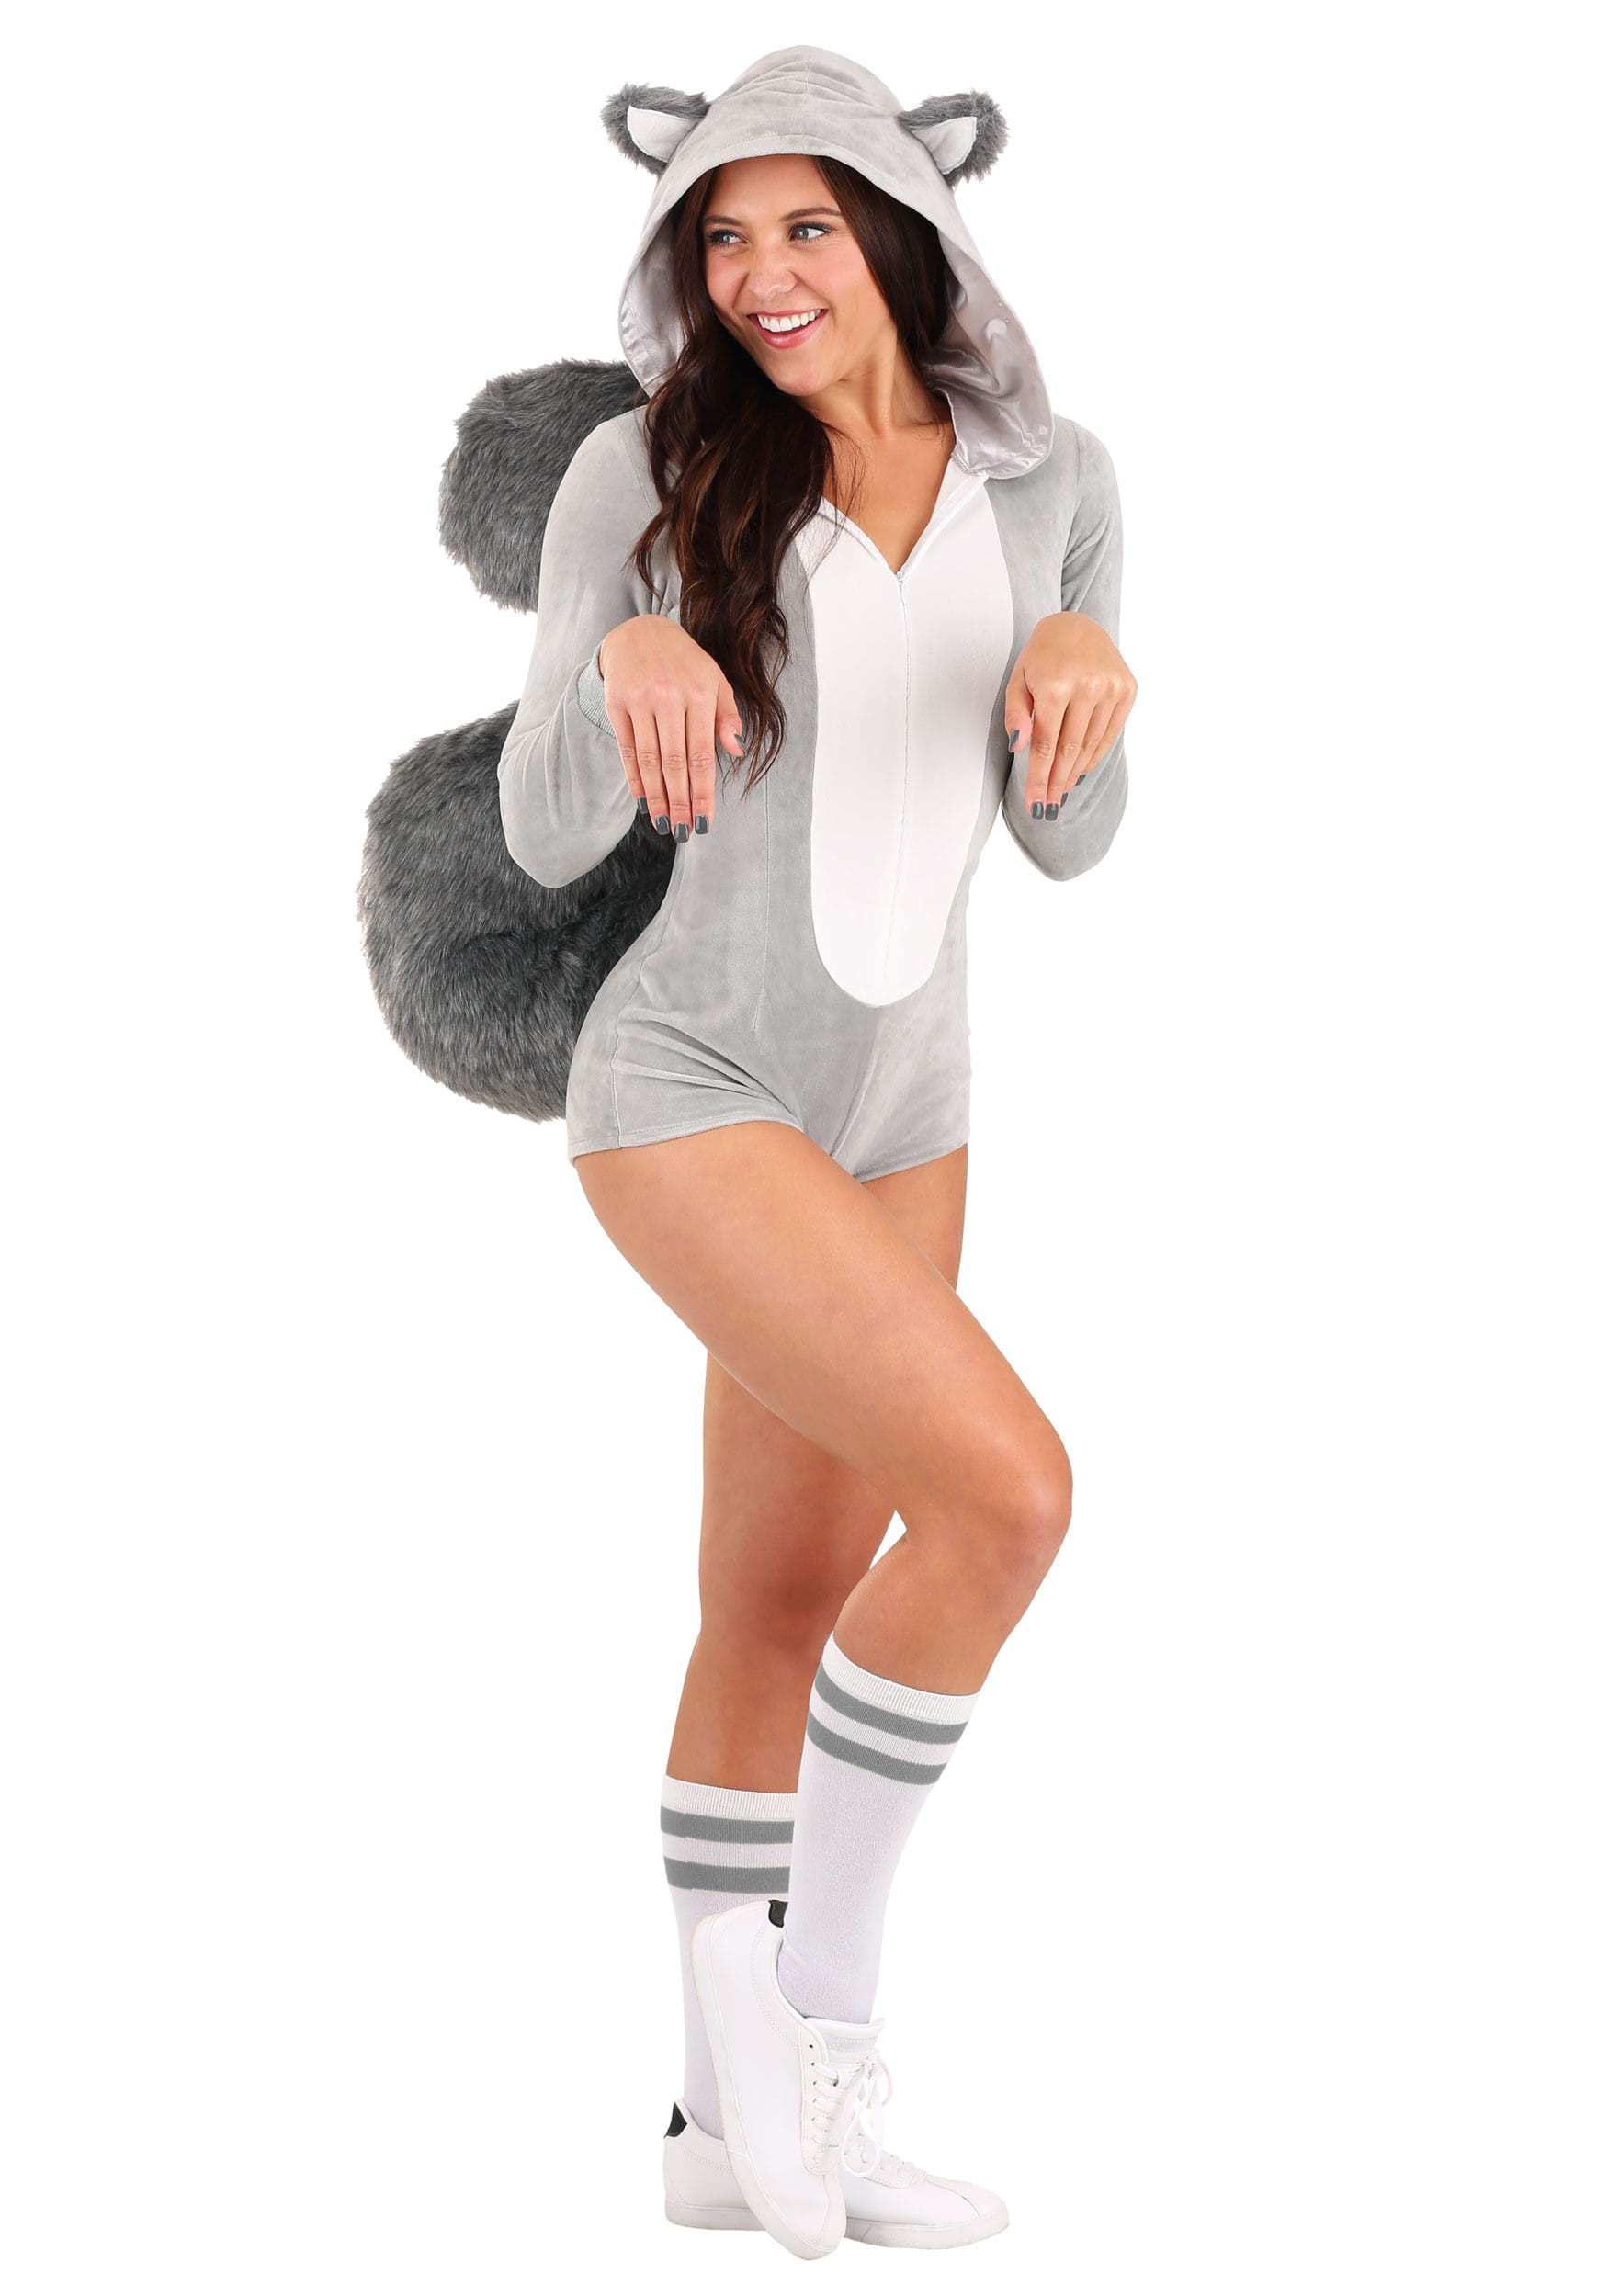 Sassy Grey Squirrel Costume for Women